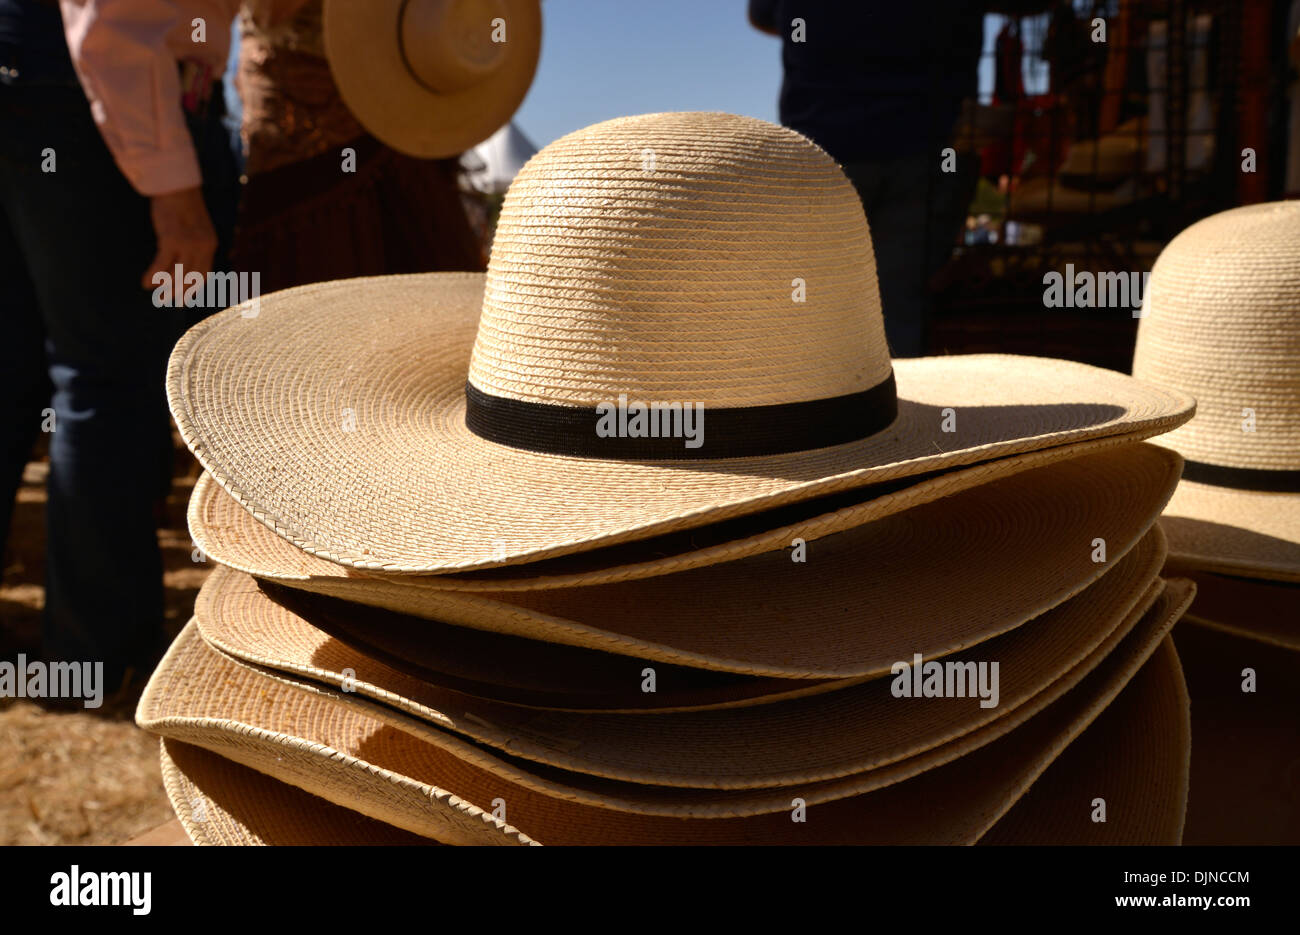 The Roundup & Open House, a celebration of the cowboy, at the Empire Ranch, Sonoita, Arizona, USA. Stock Photo